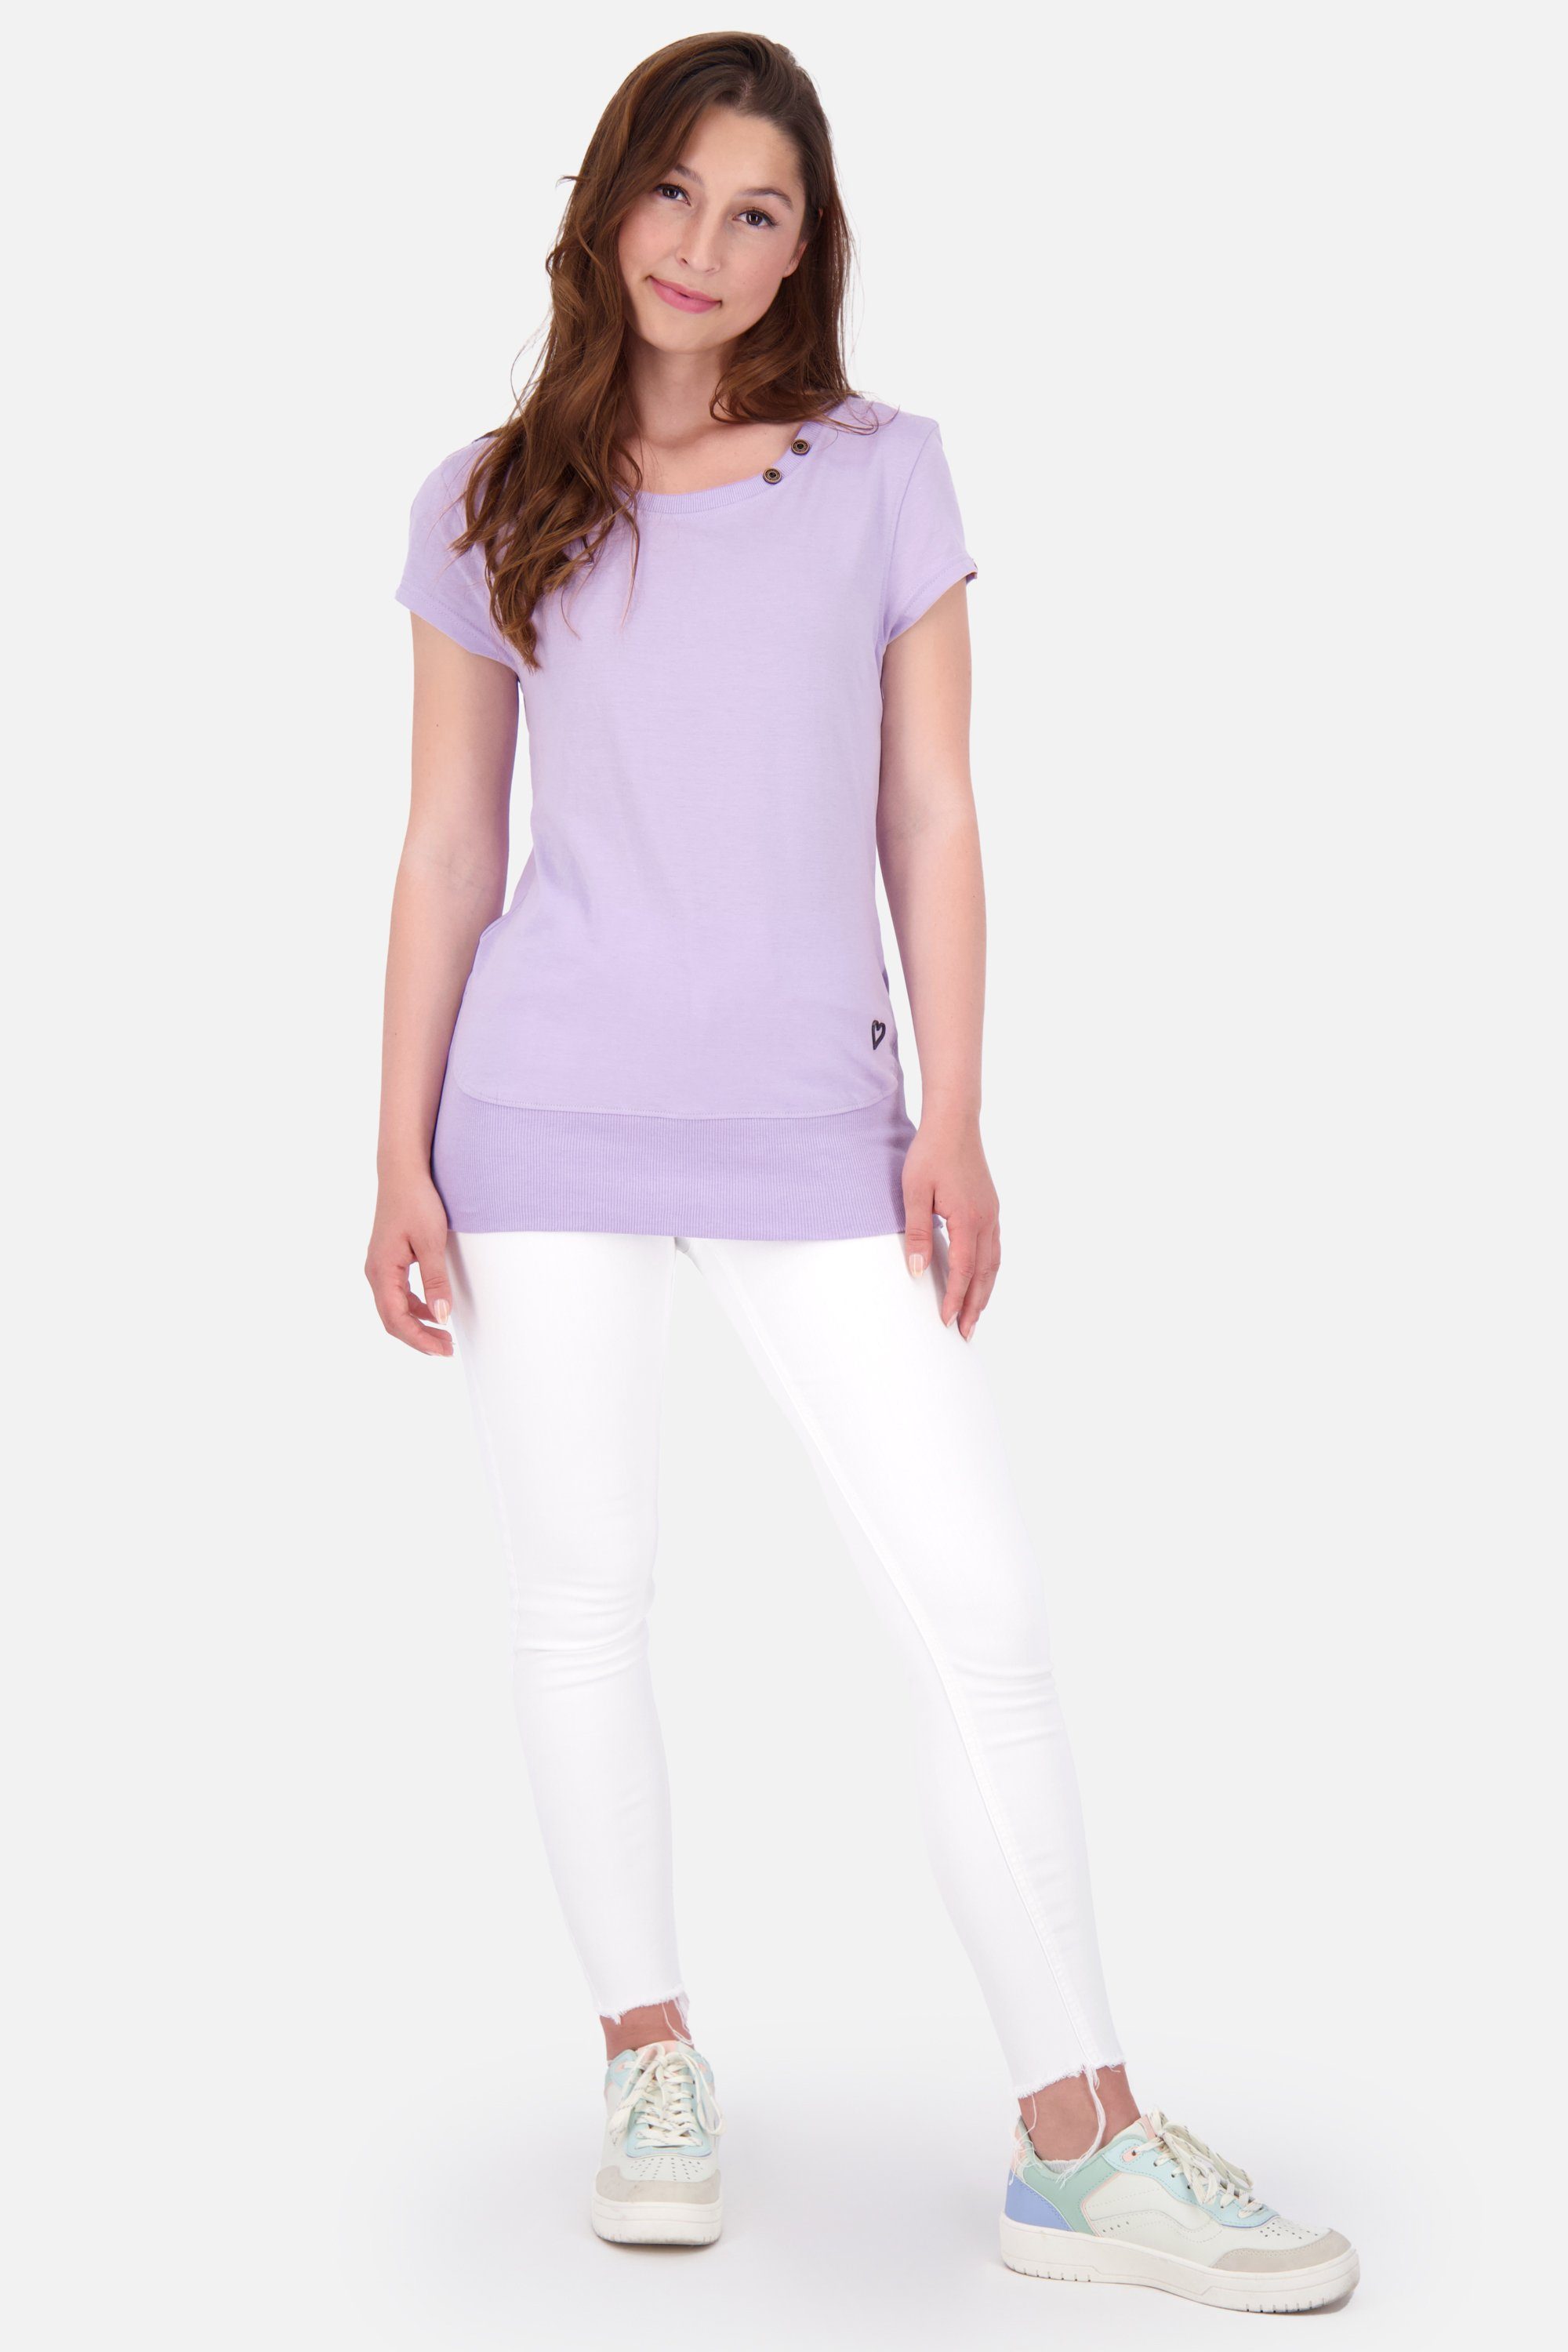 Alife & Damen digital melange Kurzarmshirt, Shirt Rundhalsshirt lavender A CocoAK Kickin Shirt